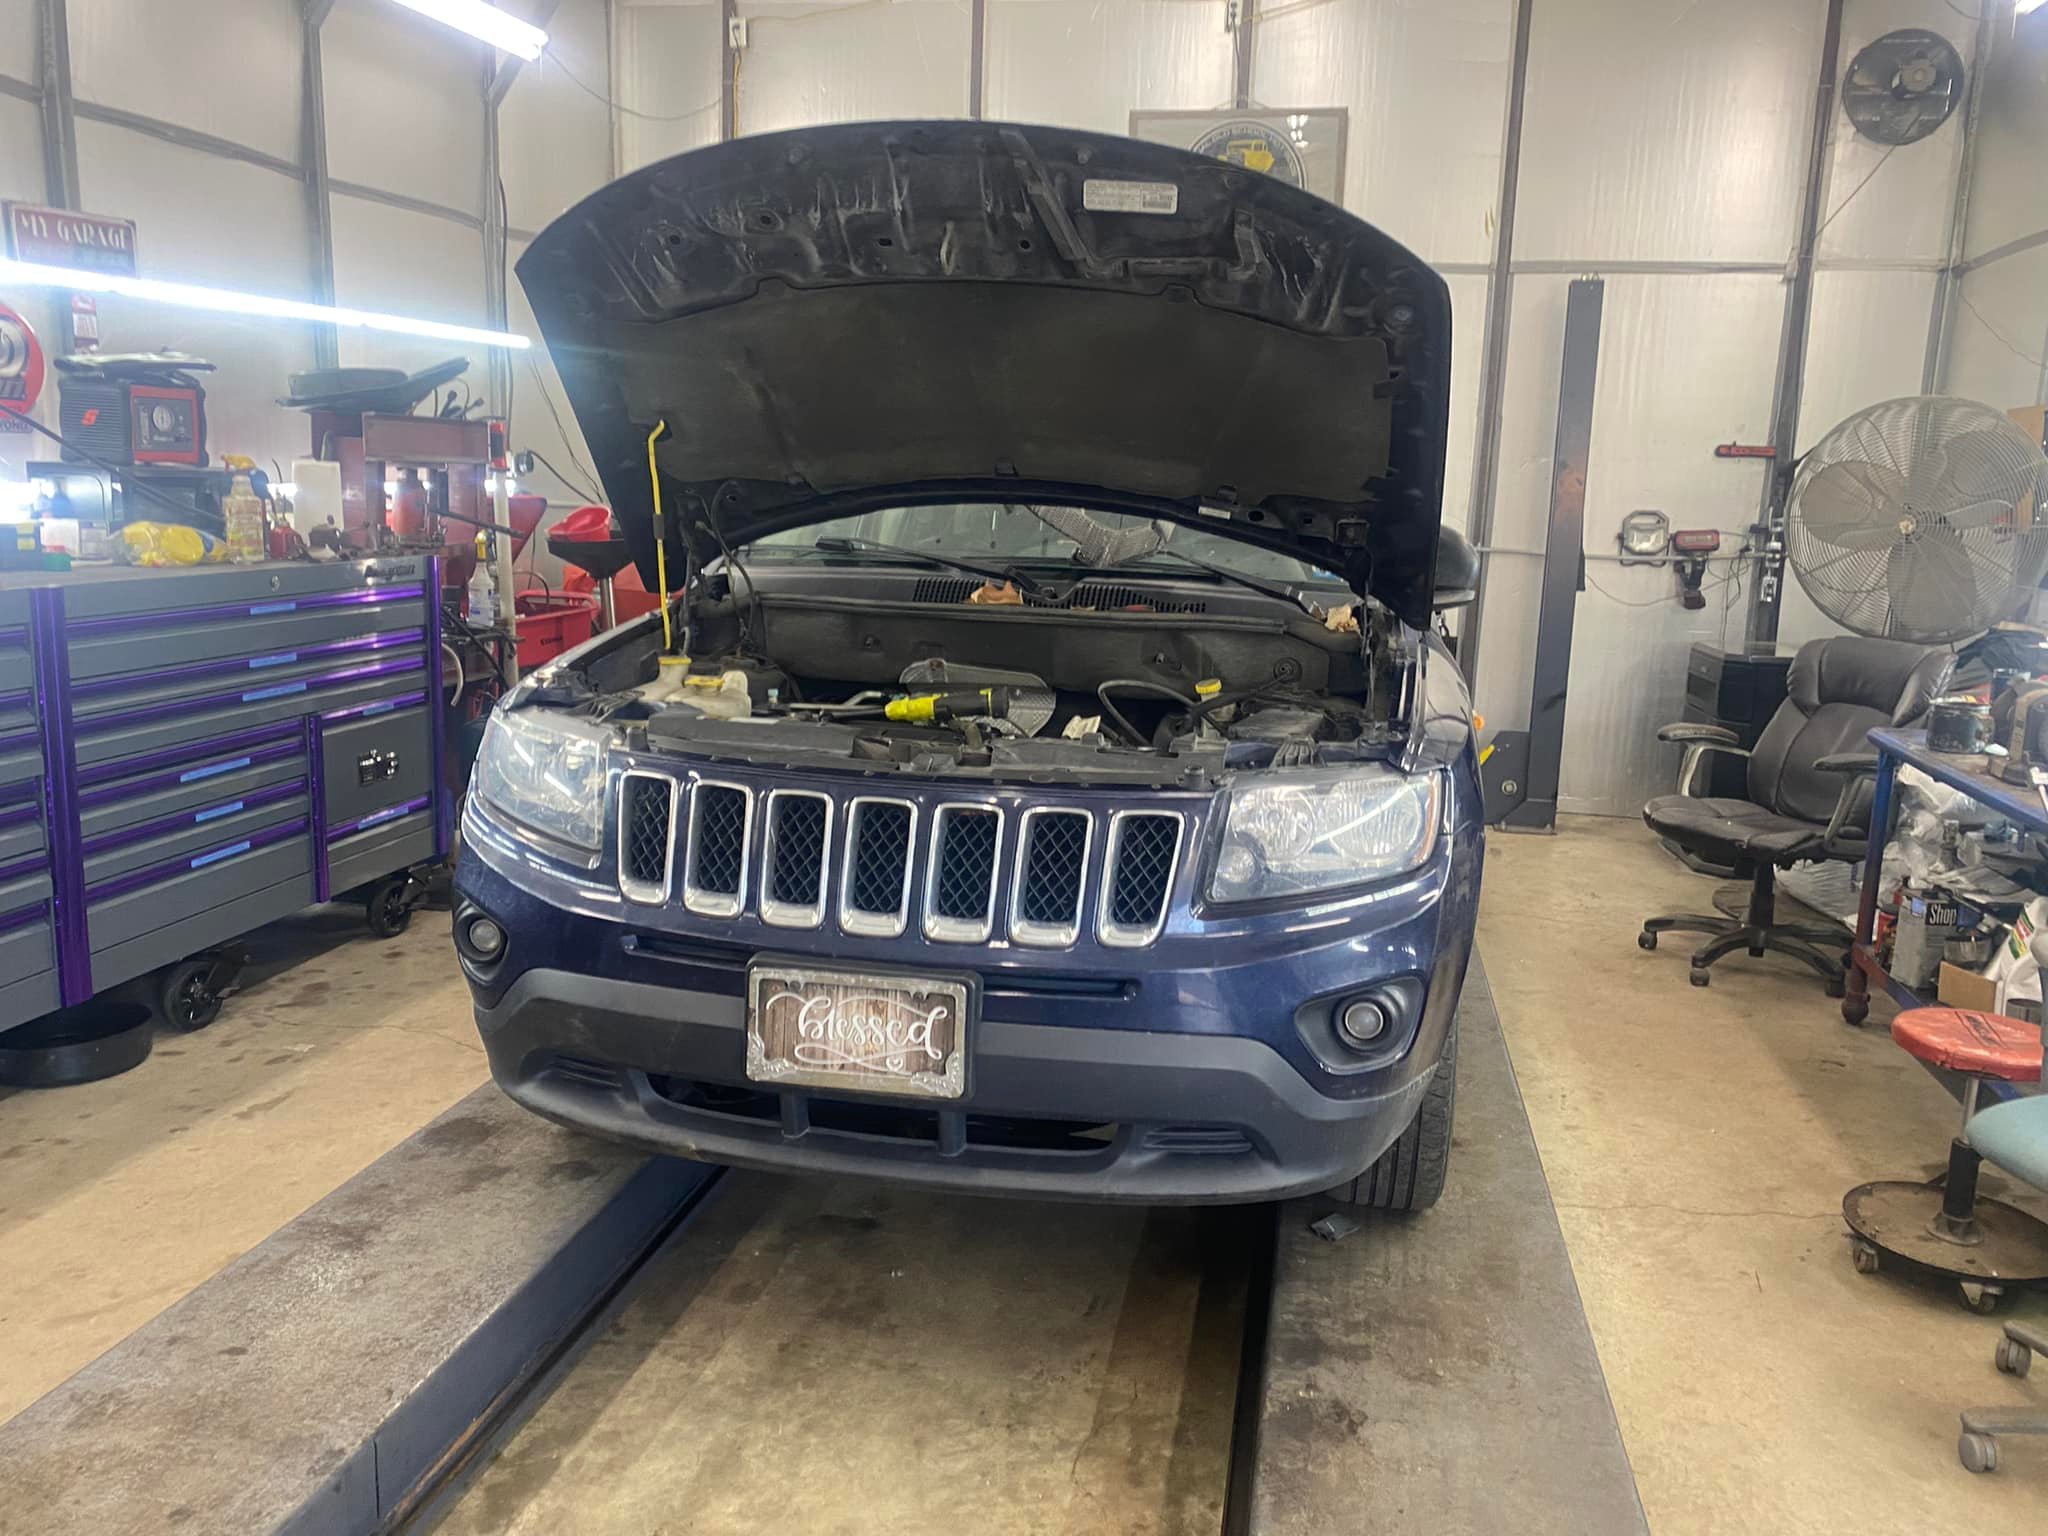 Jeep getting mechanic work